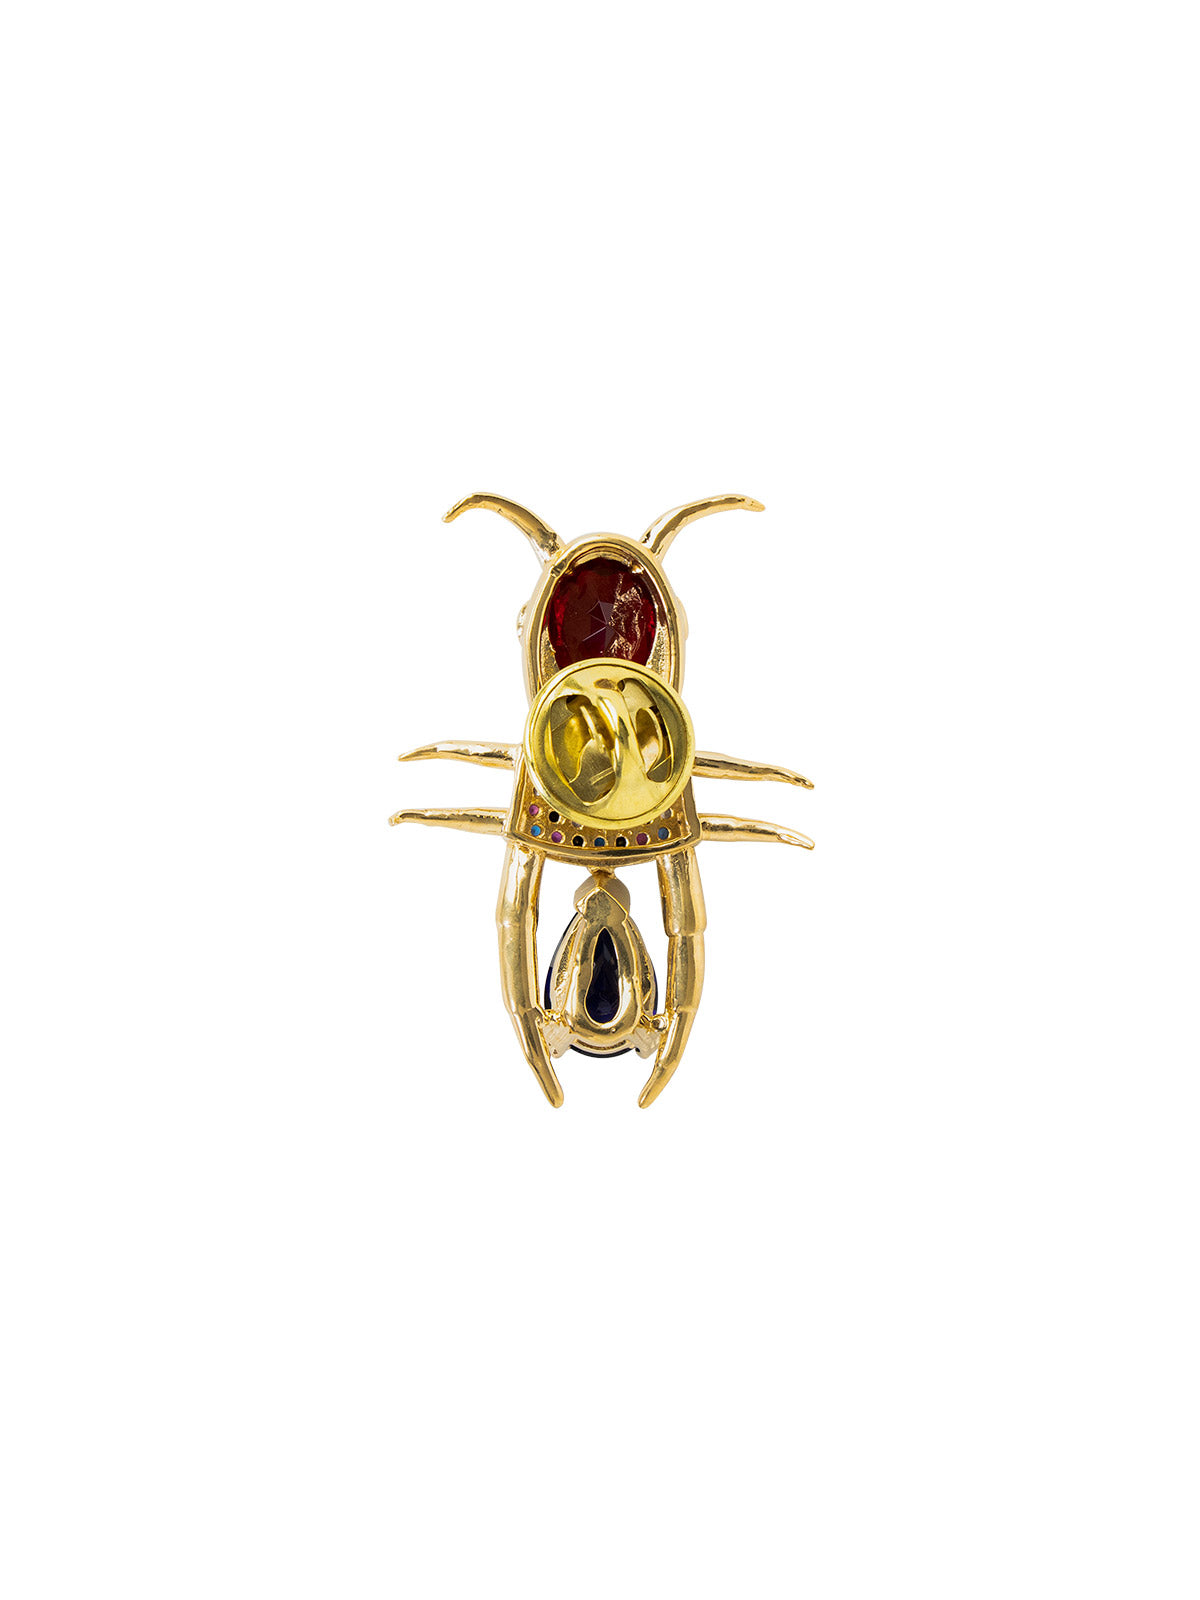 Pin Dorado Forma Insecto